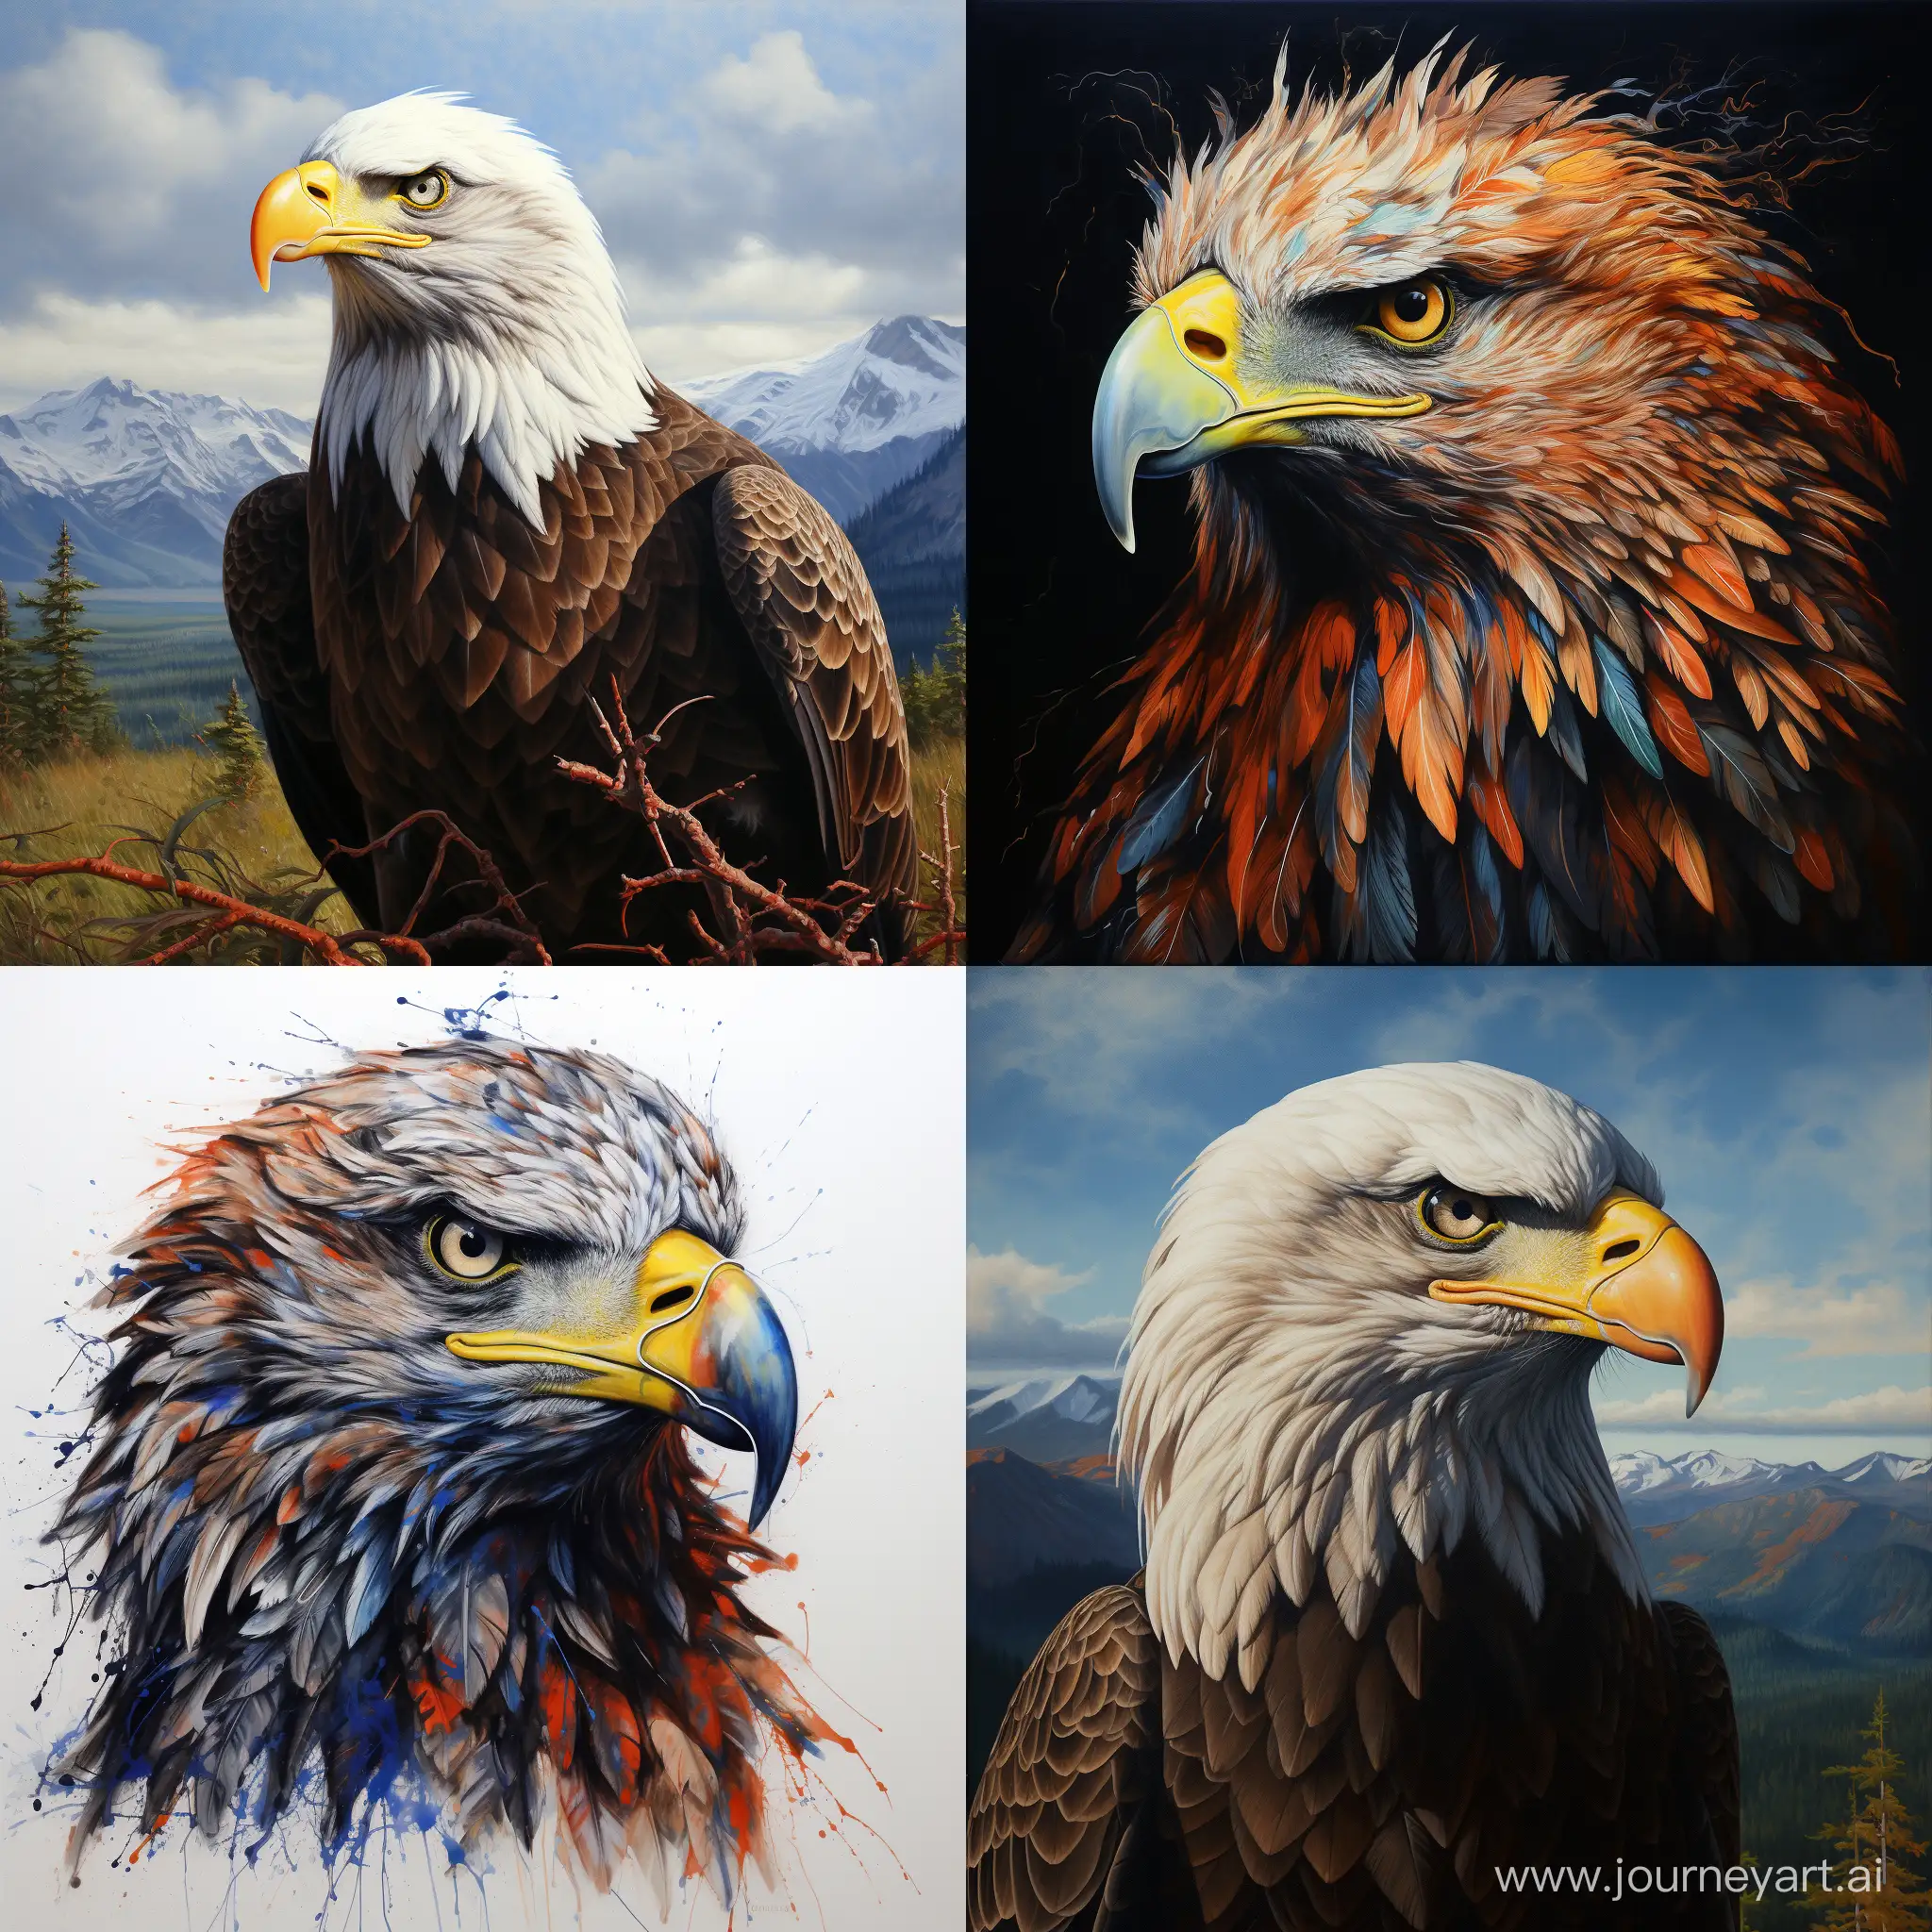 Majestic-Eagle-in-a-Square-Aspect-Ratio-AI-Art-62185